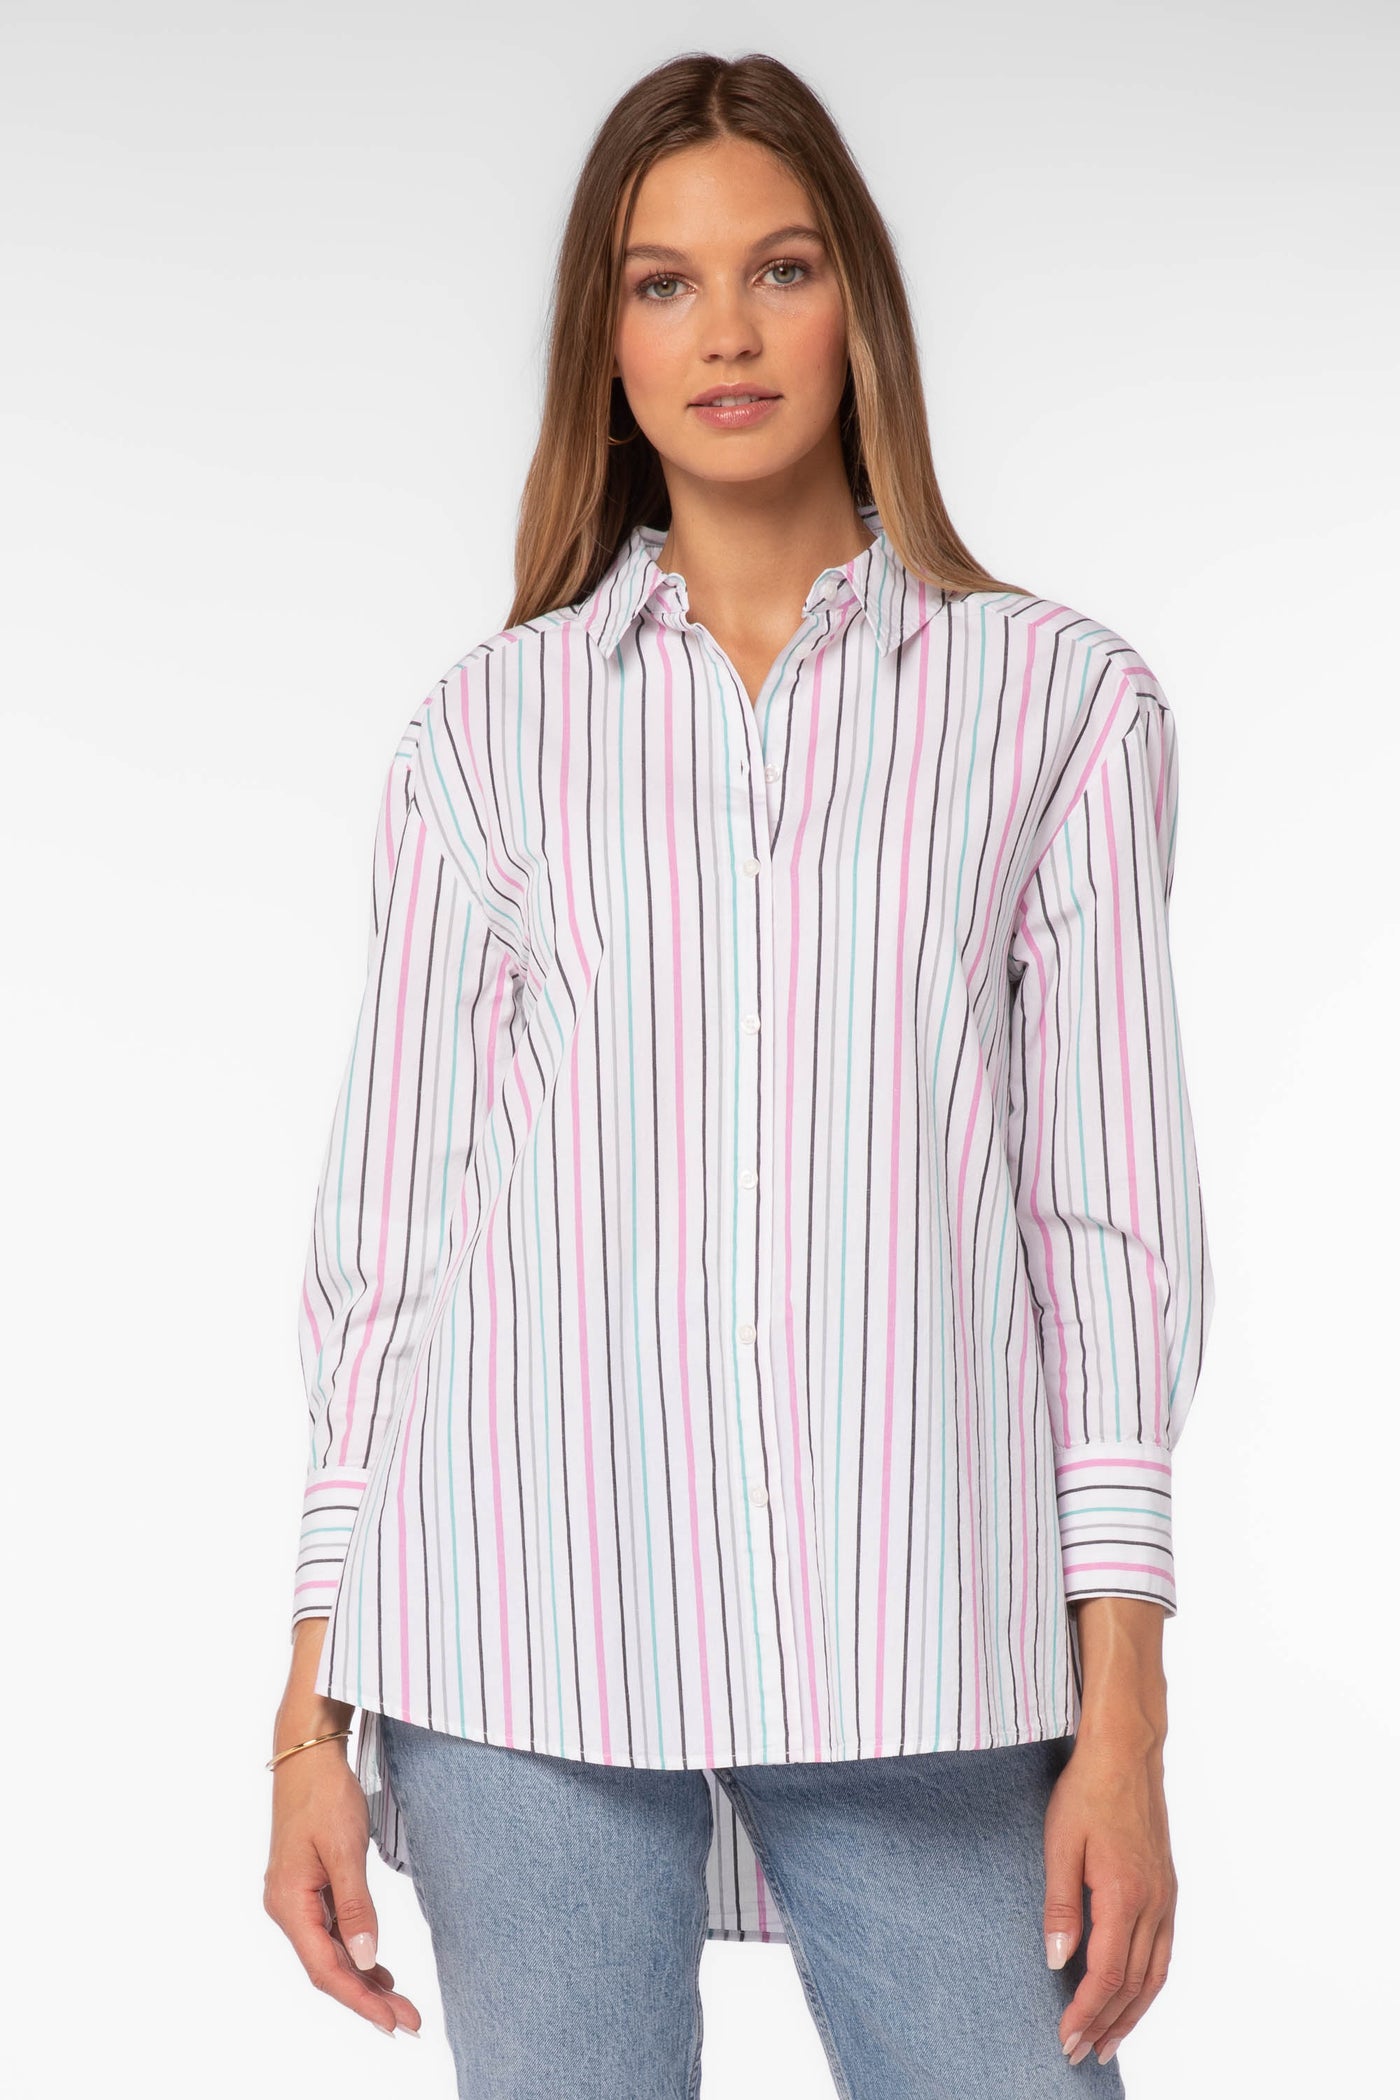 Westerly Blue Pink Black Stripe Top - Tops - Velvet Heart Clothing